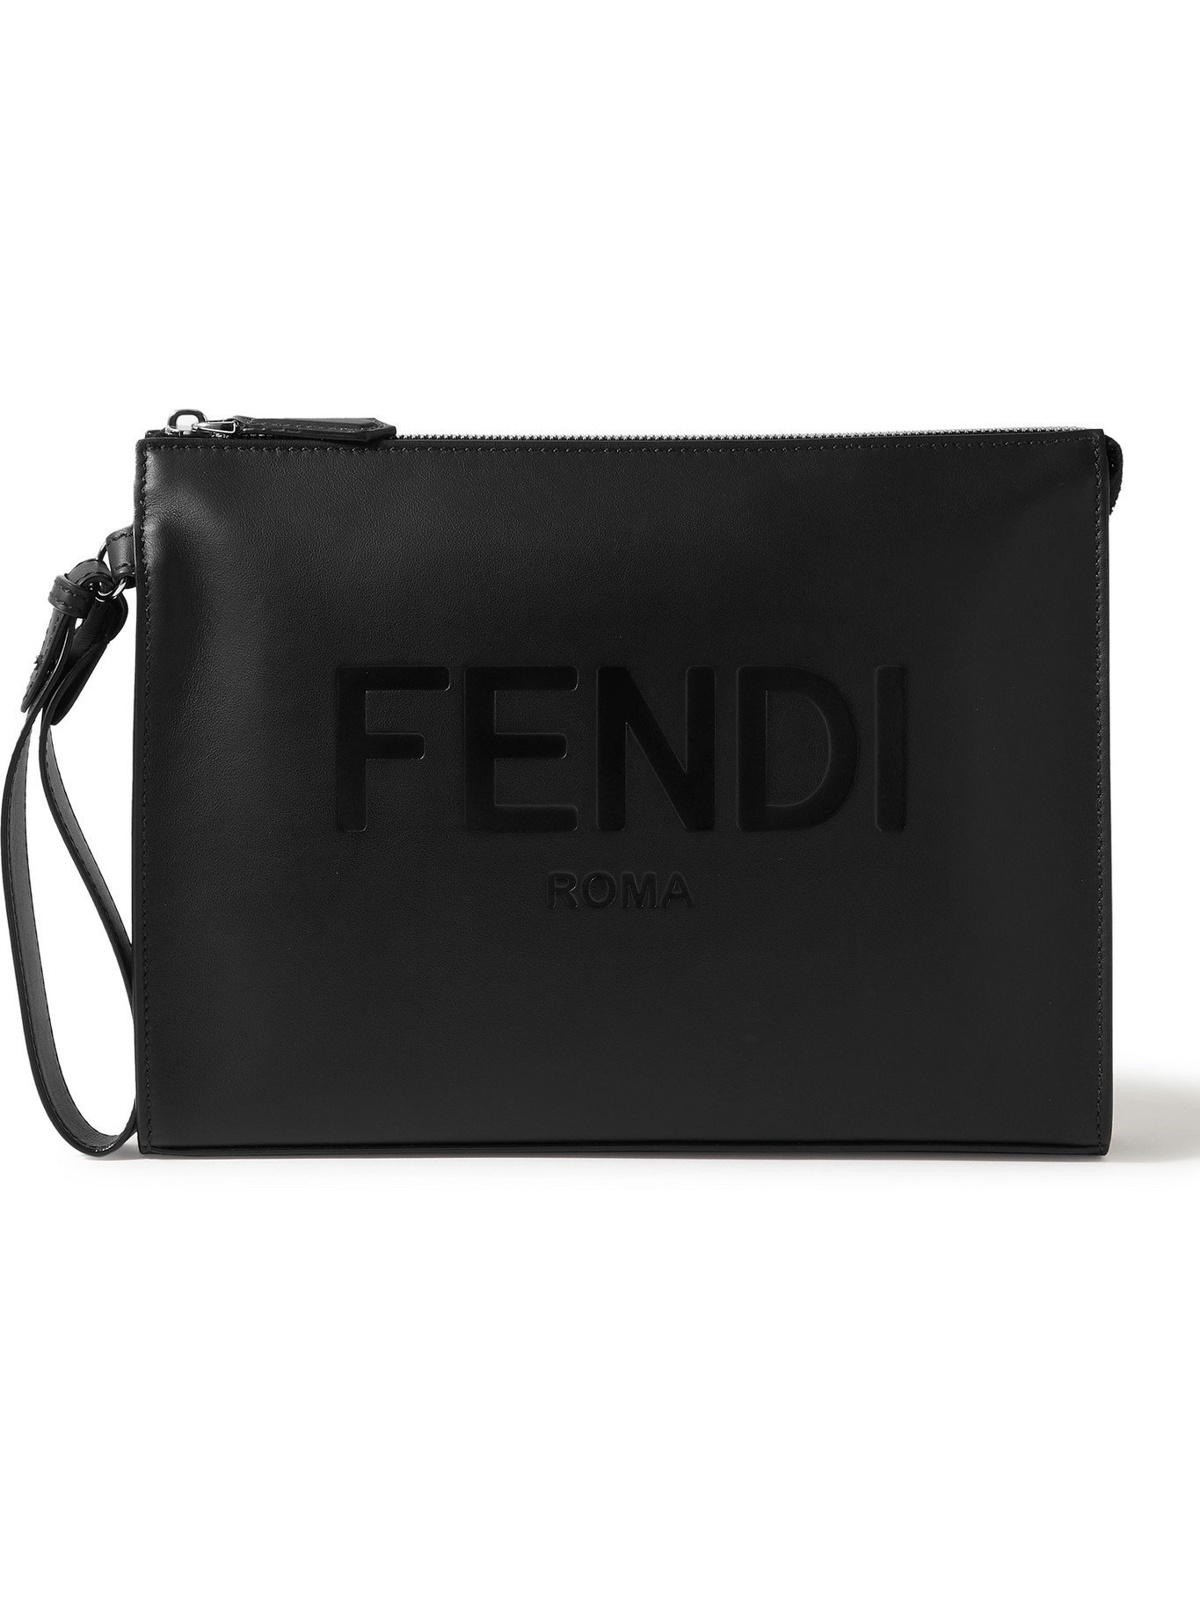 Fendi - Fendi Roma Flat Large Leather Pouch